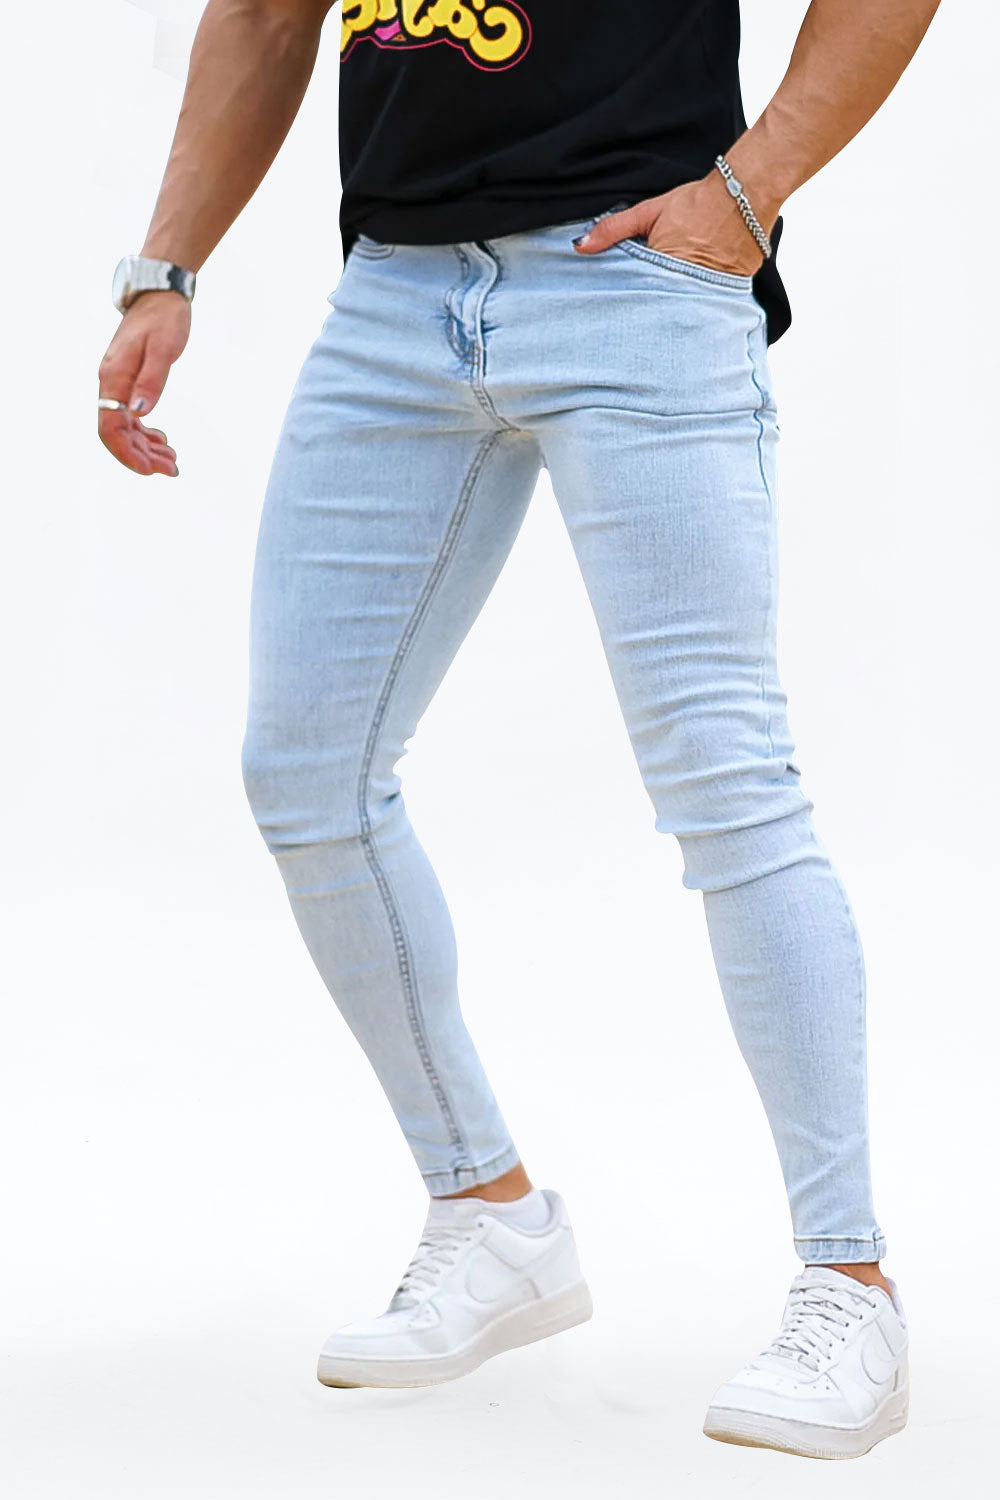 GINGTTO Mens Skinny Jeans Stretch Denim Stylish Jeans for Men